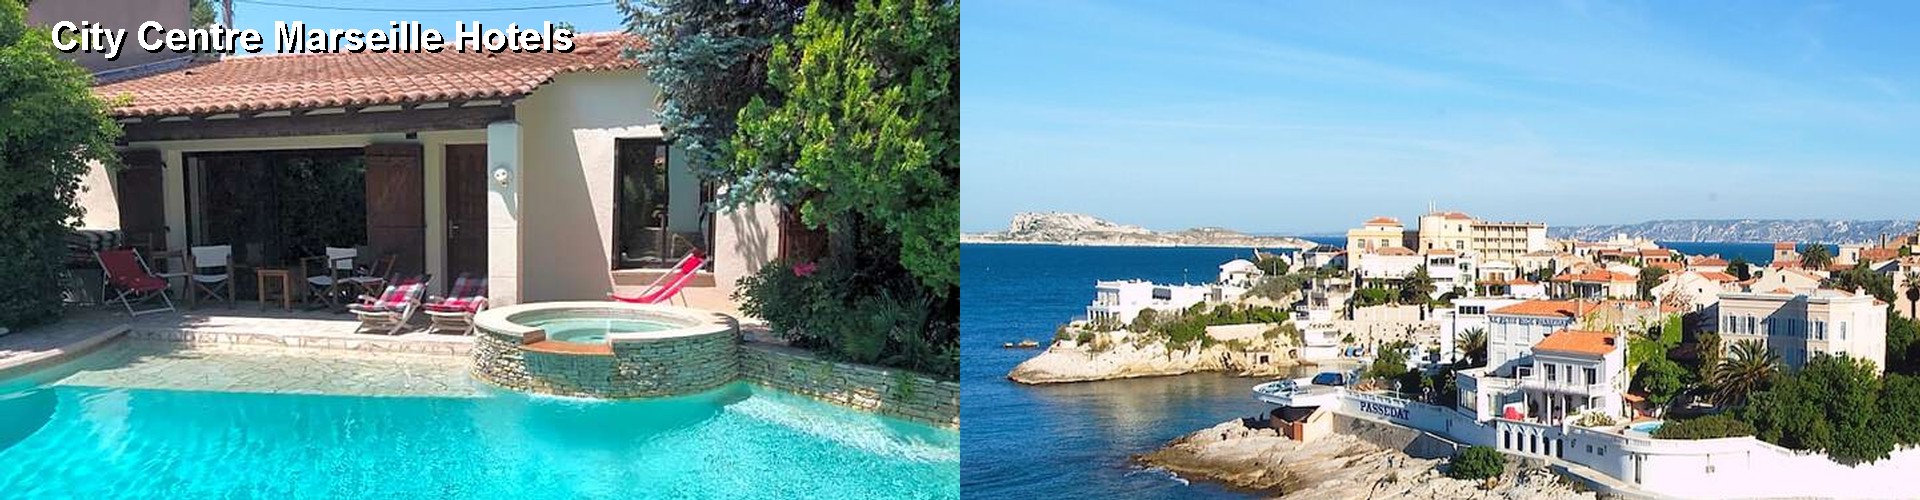 4 Best Hotels near City Centre Marseille